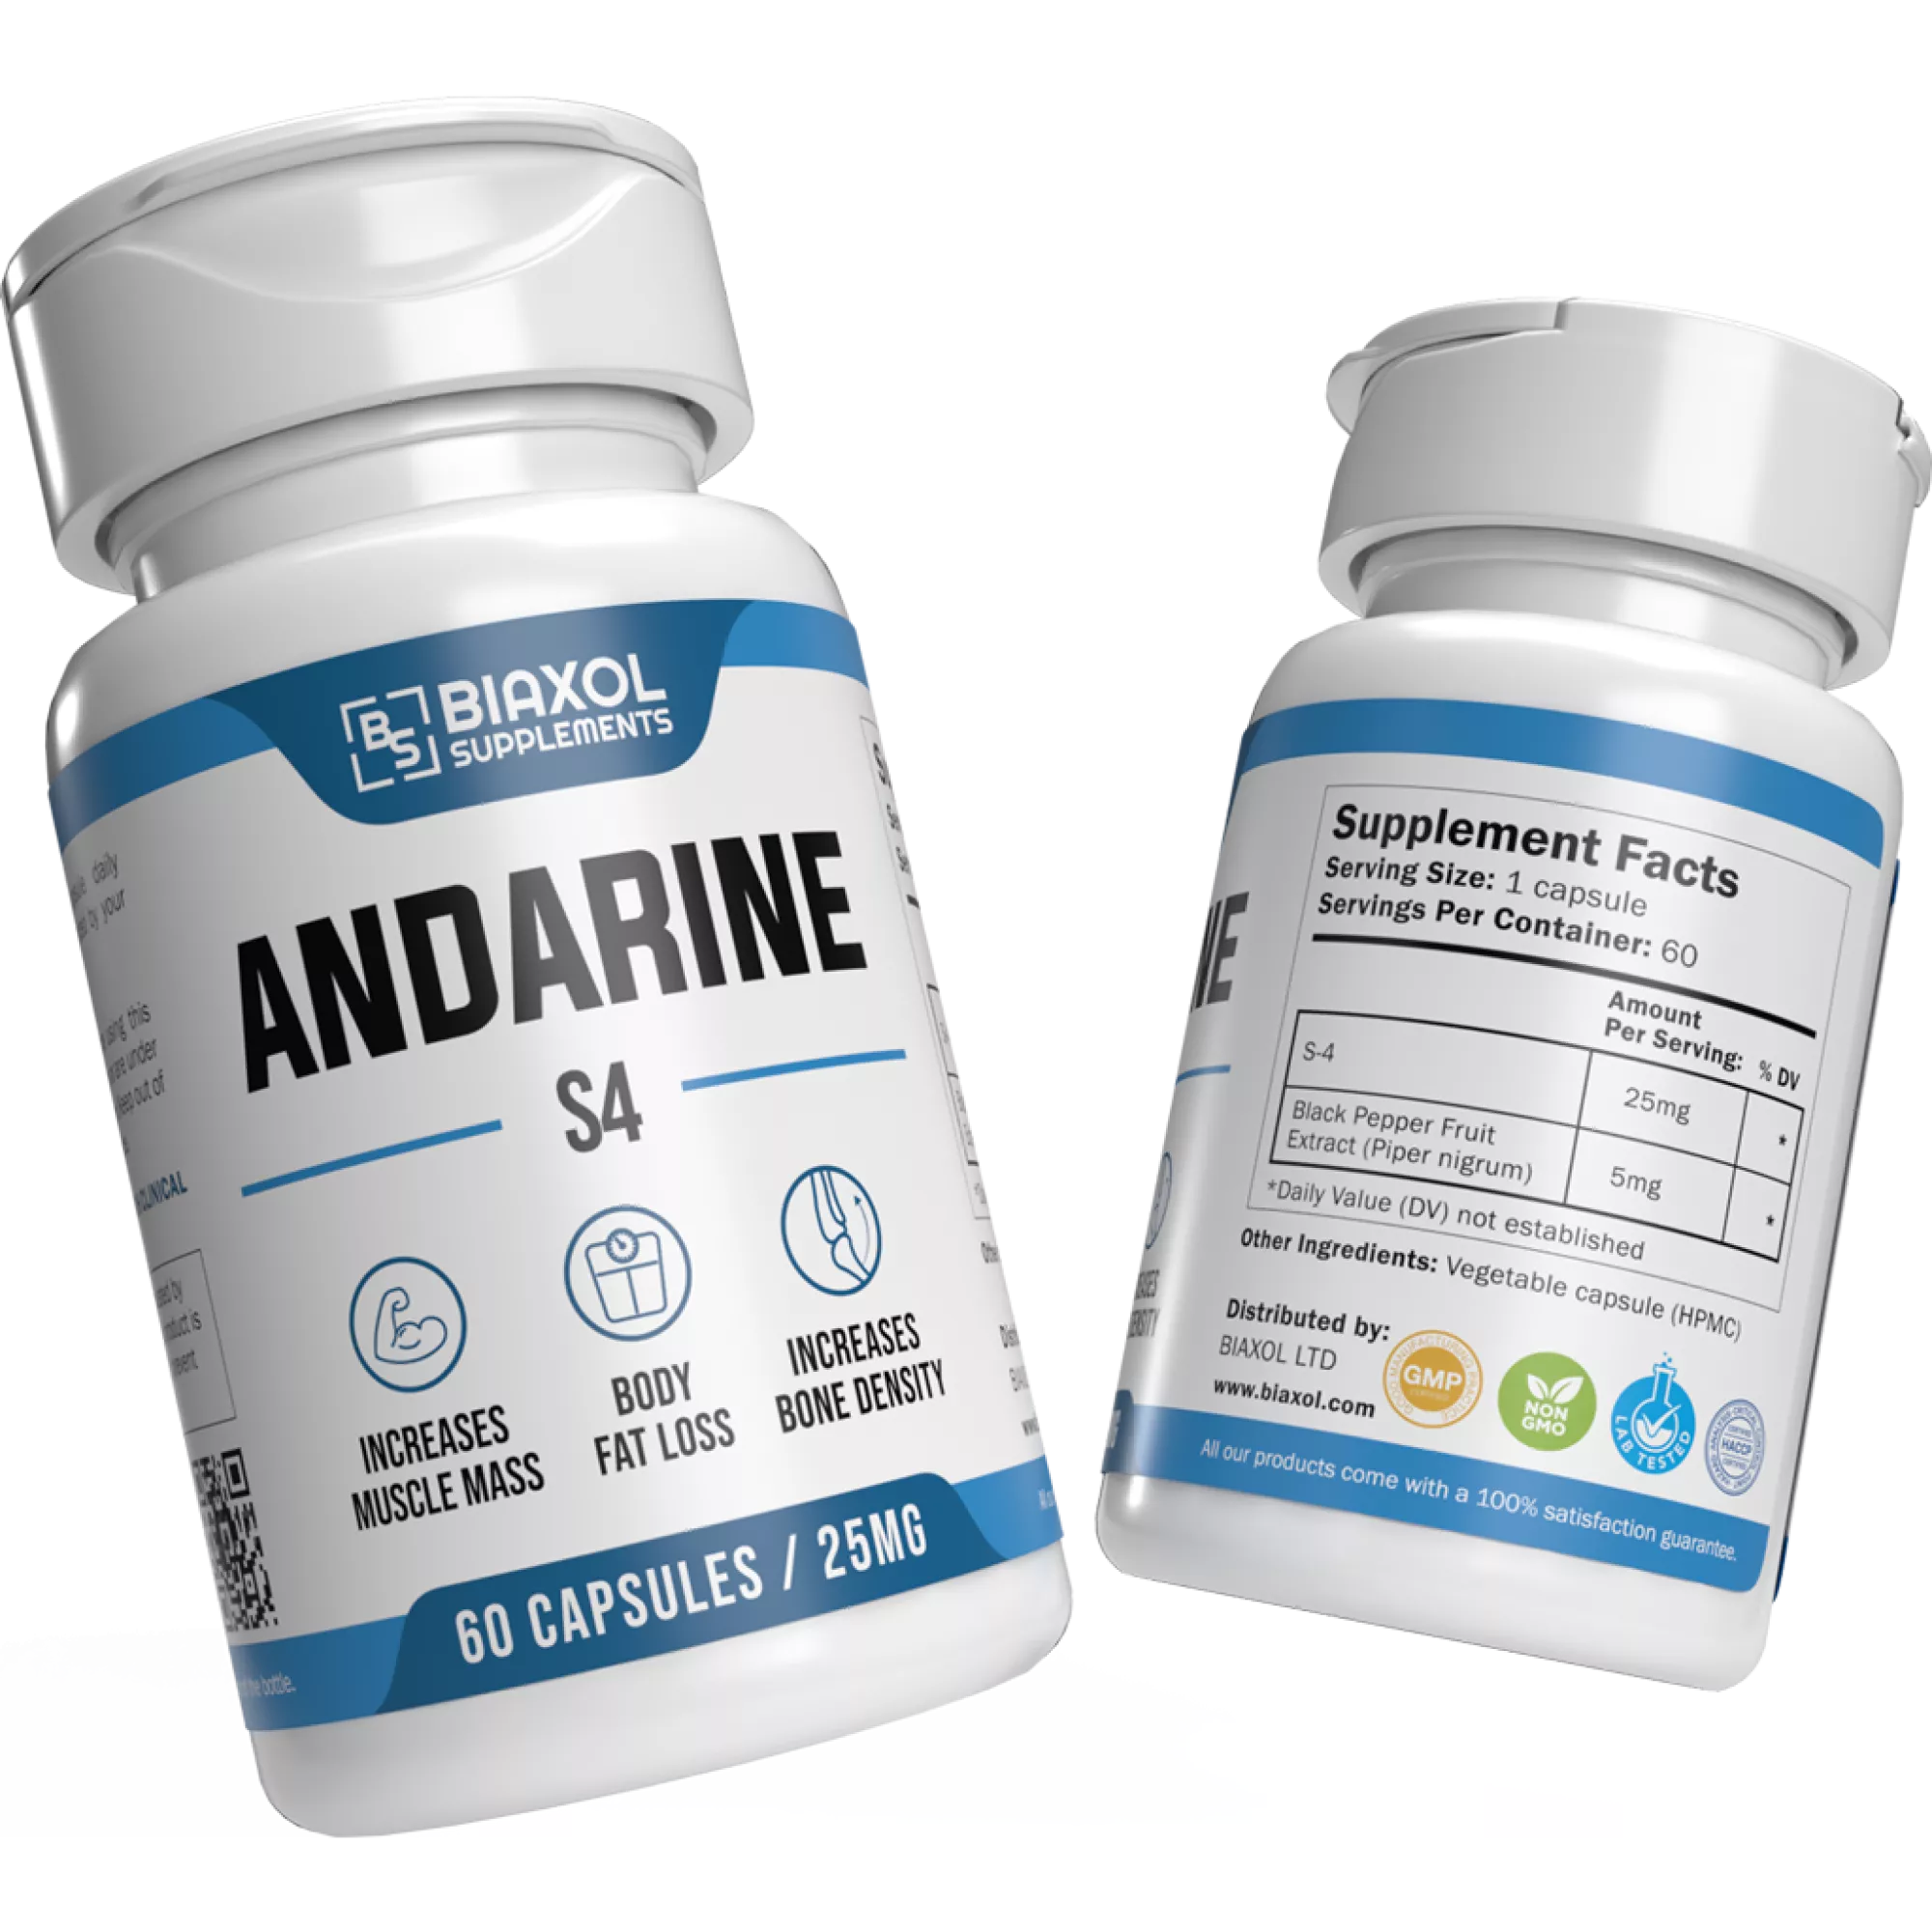 ANDARINE (S4), Biaxol, Buy Steroids Online - www.deuspower.shop